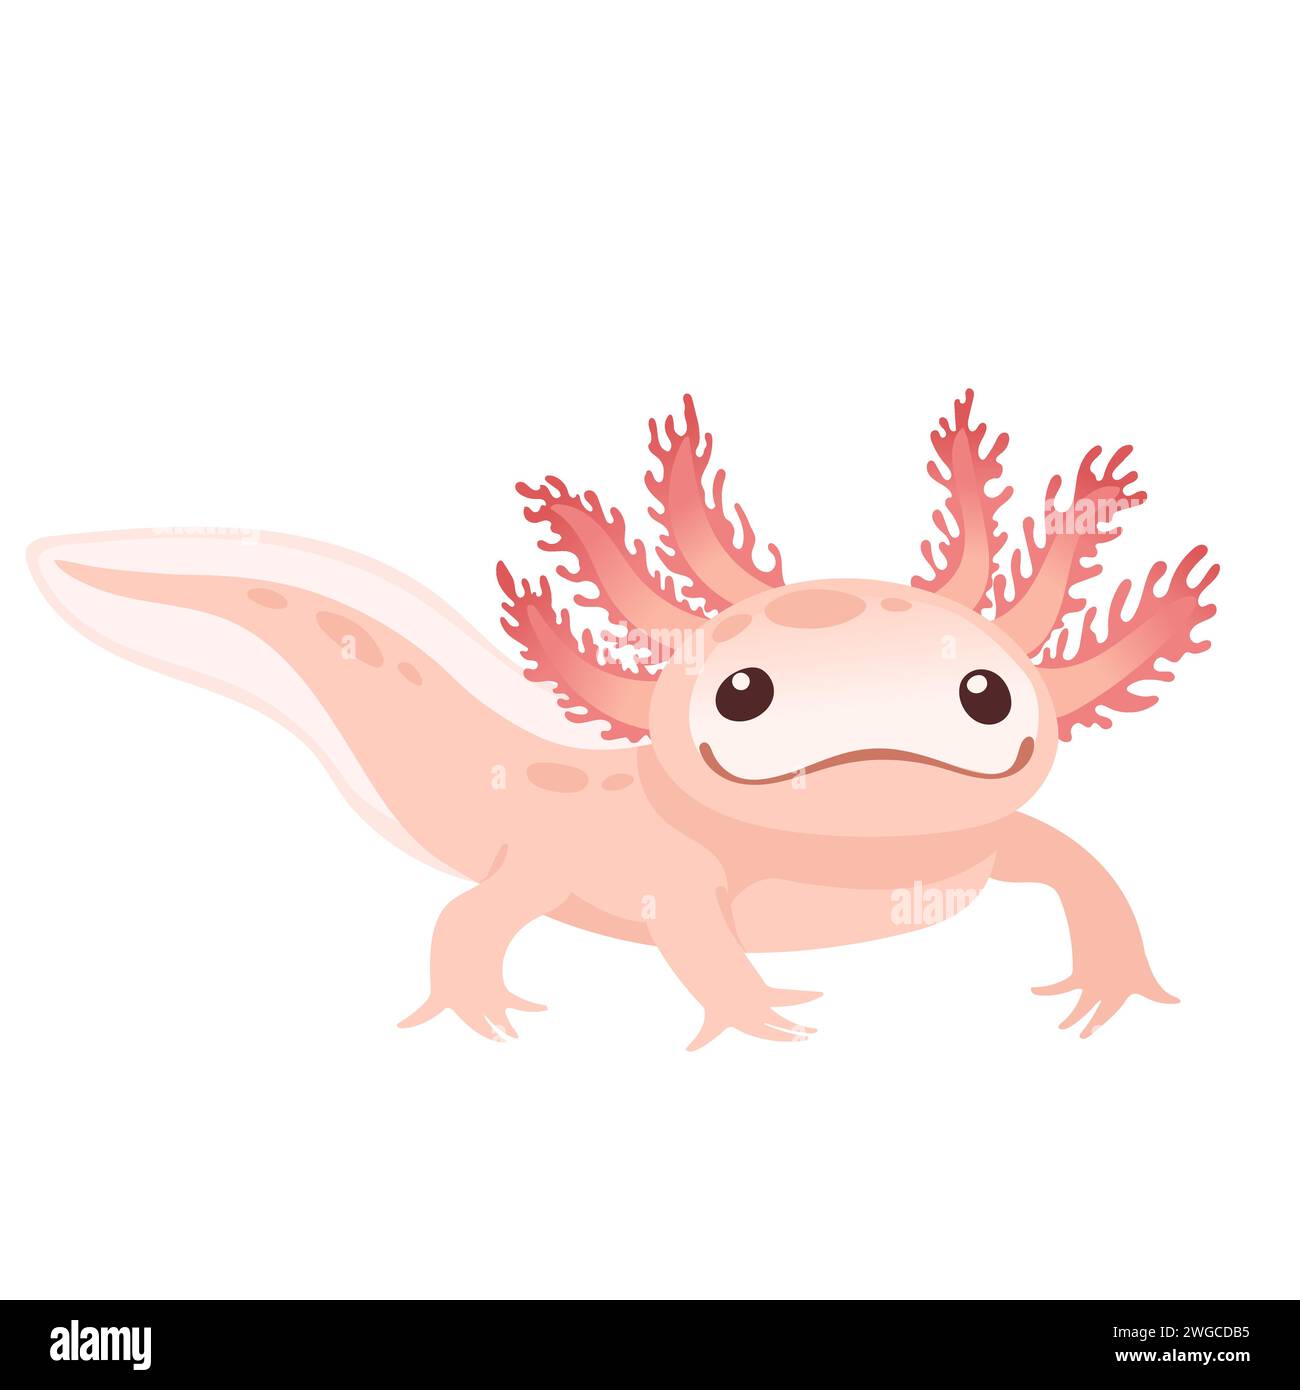 Cute cartoon axolotl pink color amphibian animal vector illustration ...